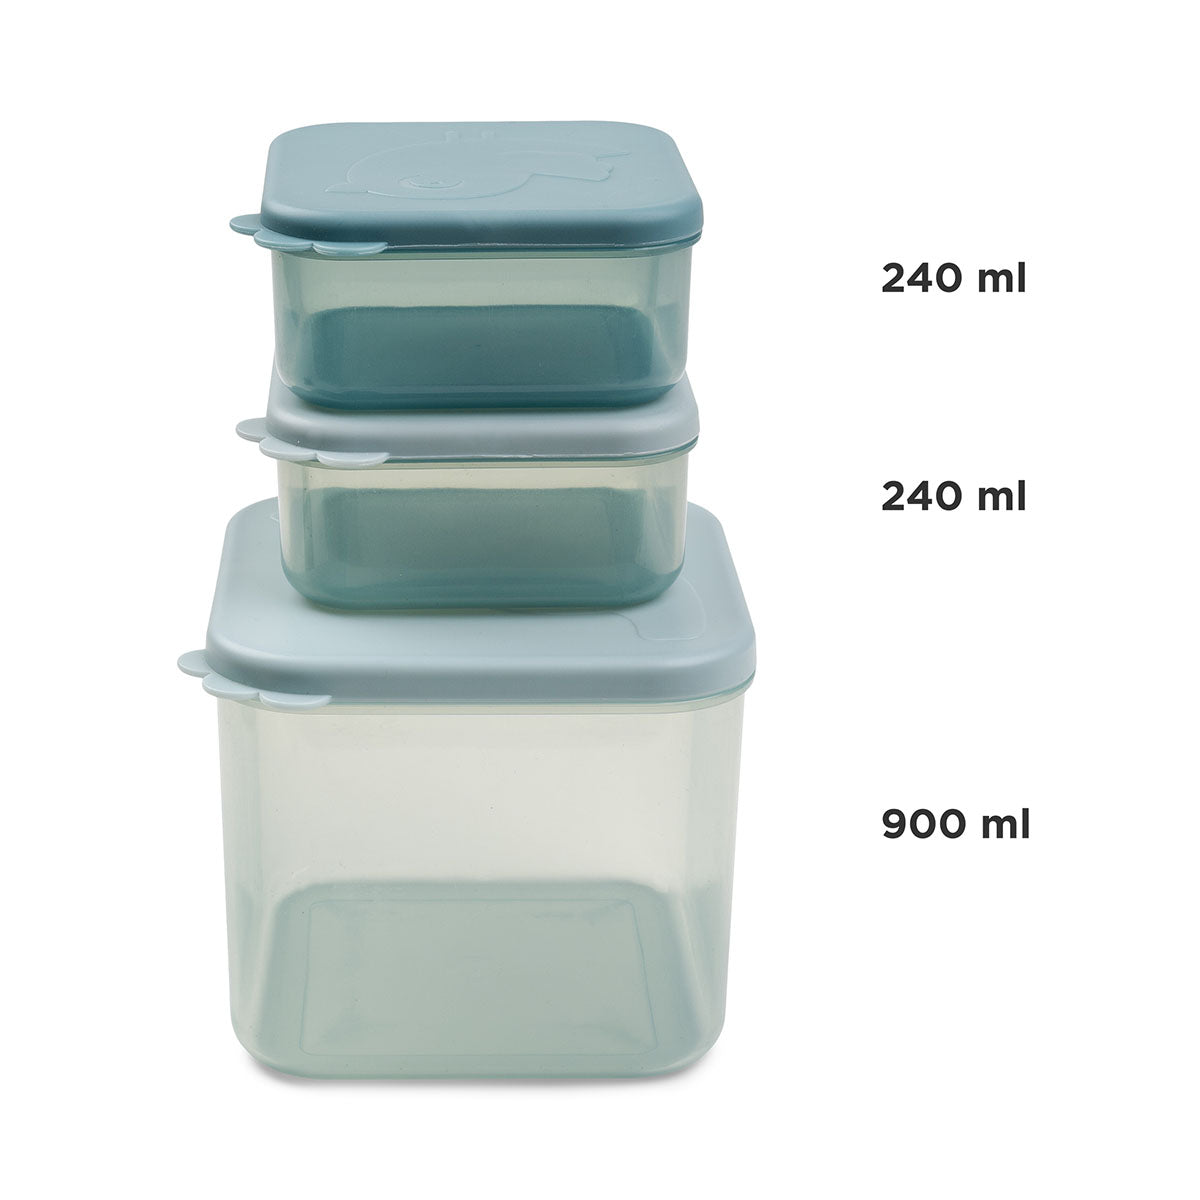 Food storage container set M - Elphee - Blue